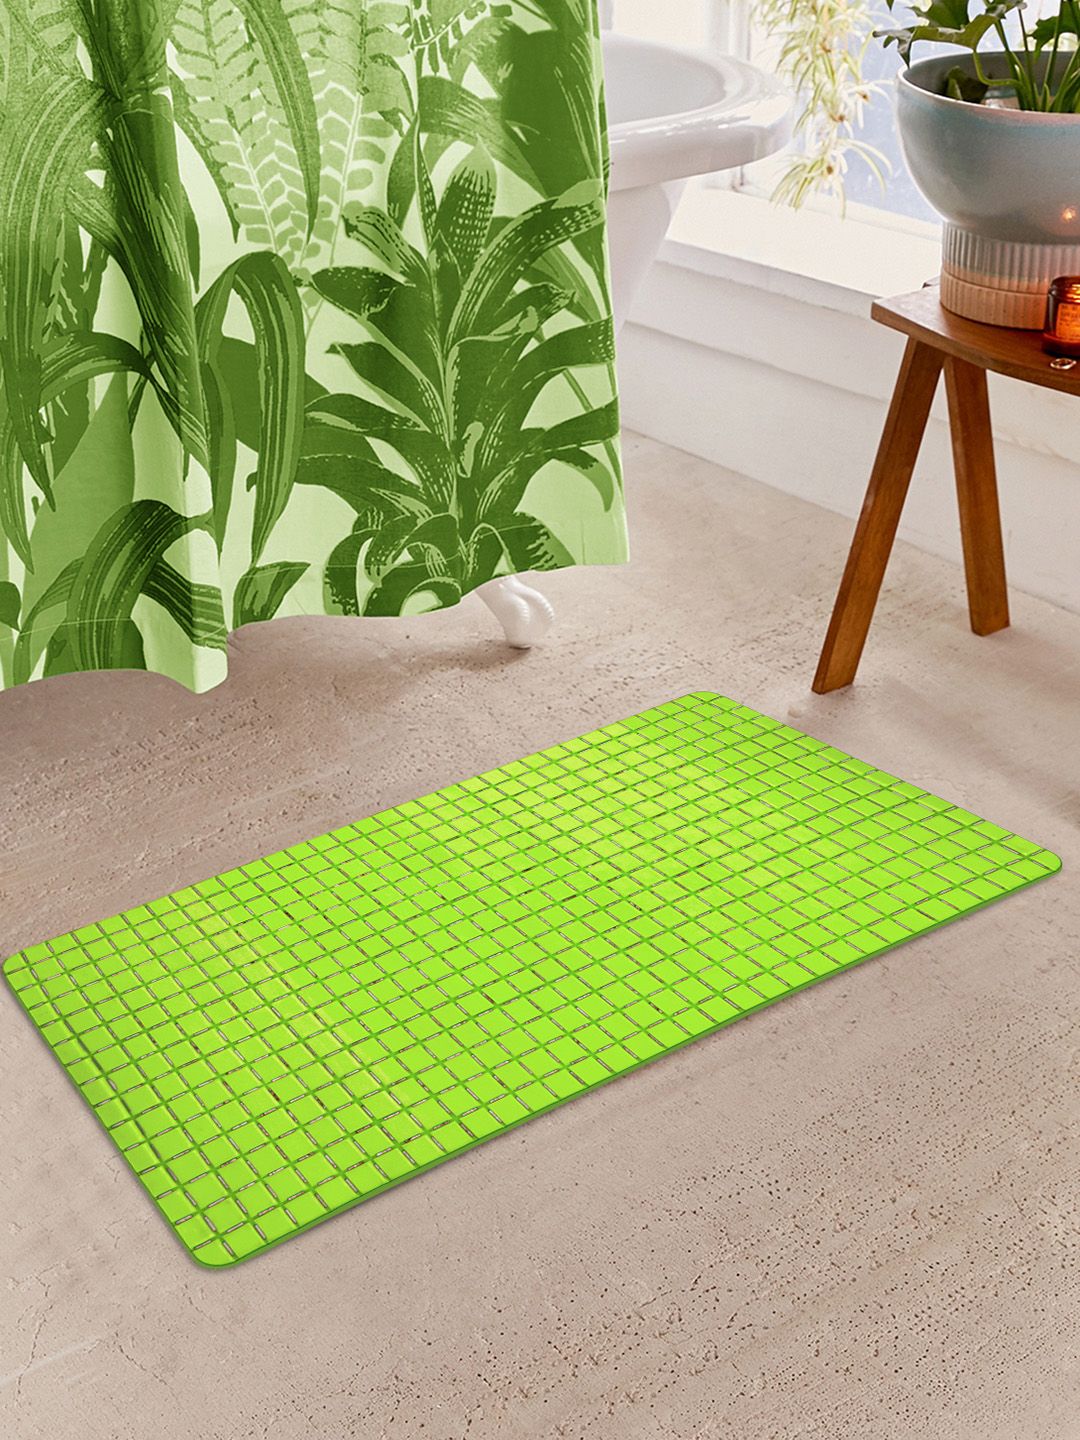 Story@Home Green PVC Anti-Slip Floor Mat Price in India